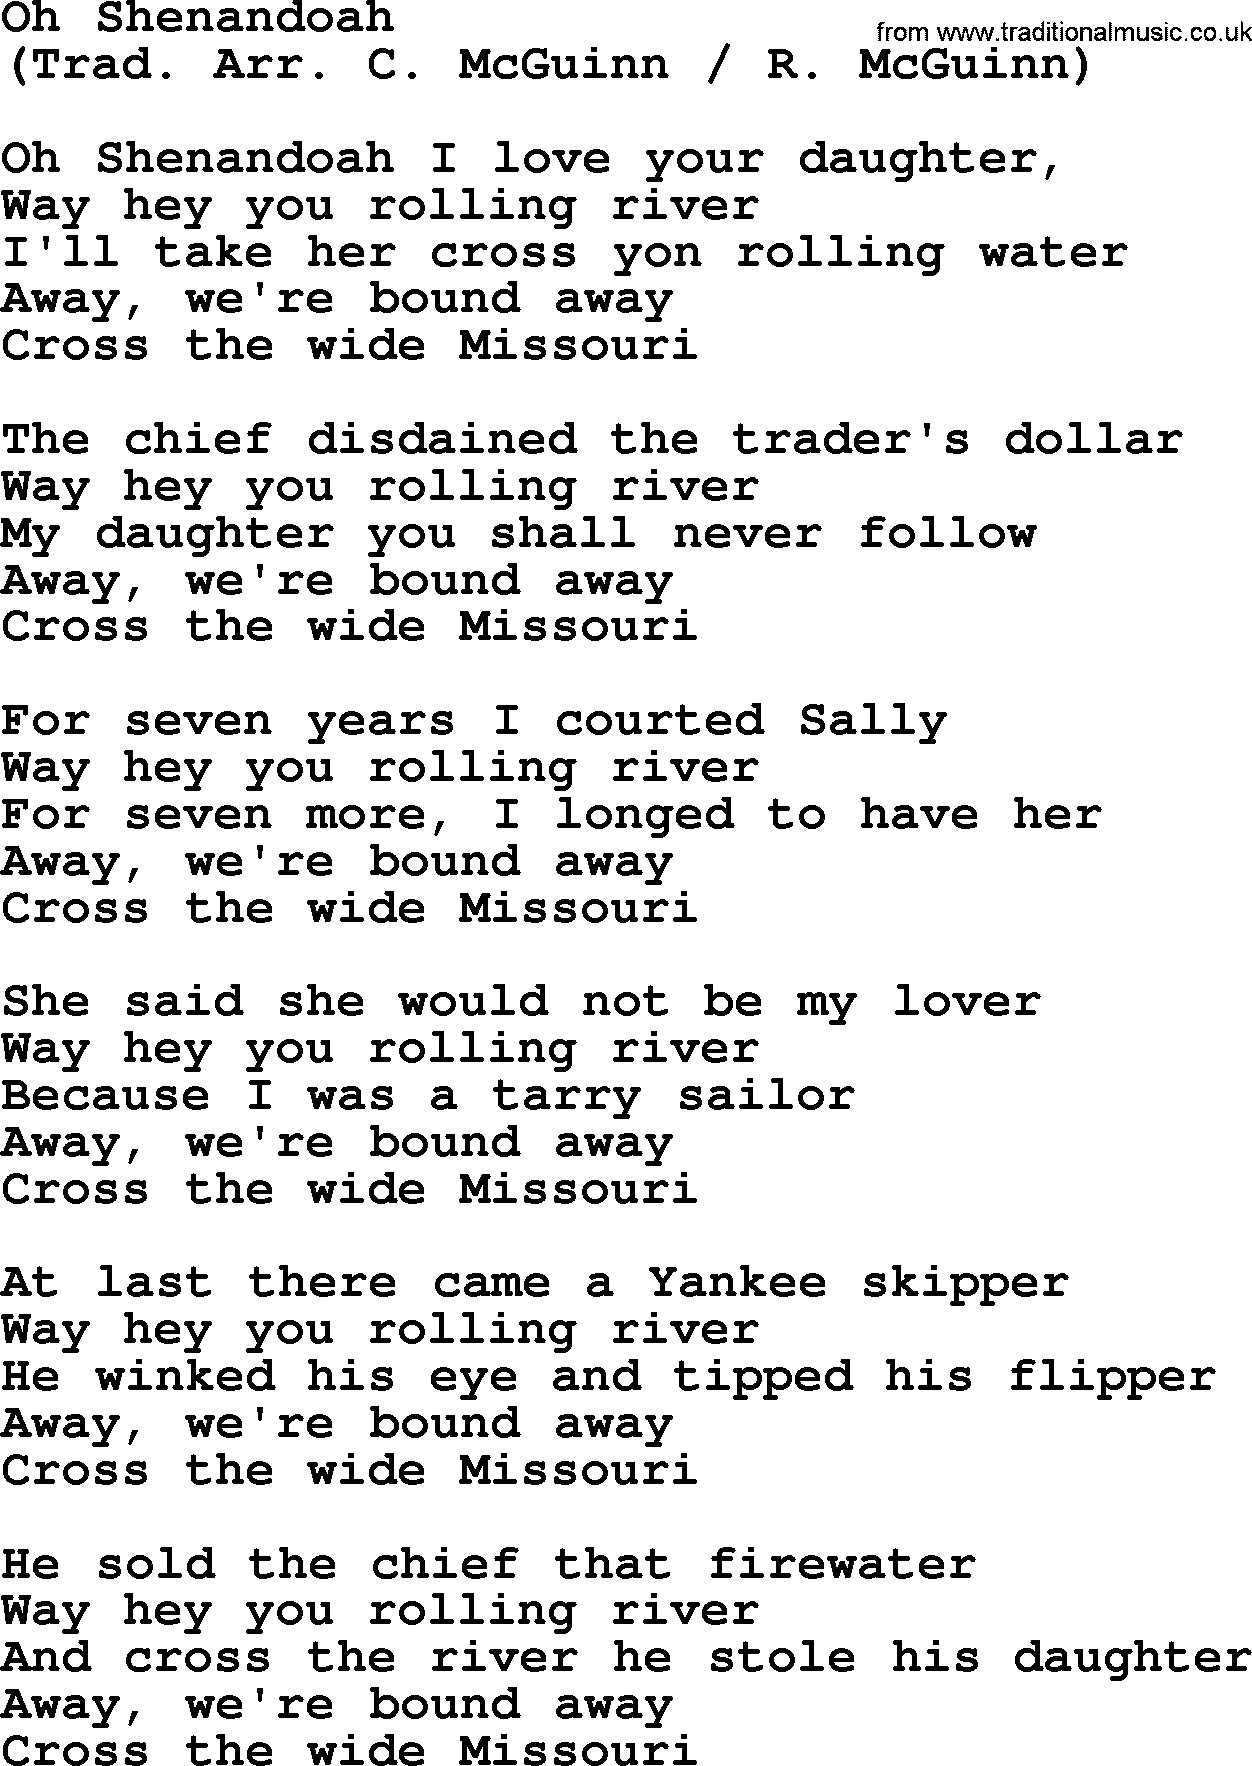 The Byrds song Oh Shenandoah, lyrics